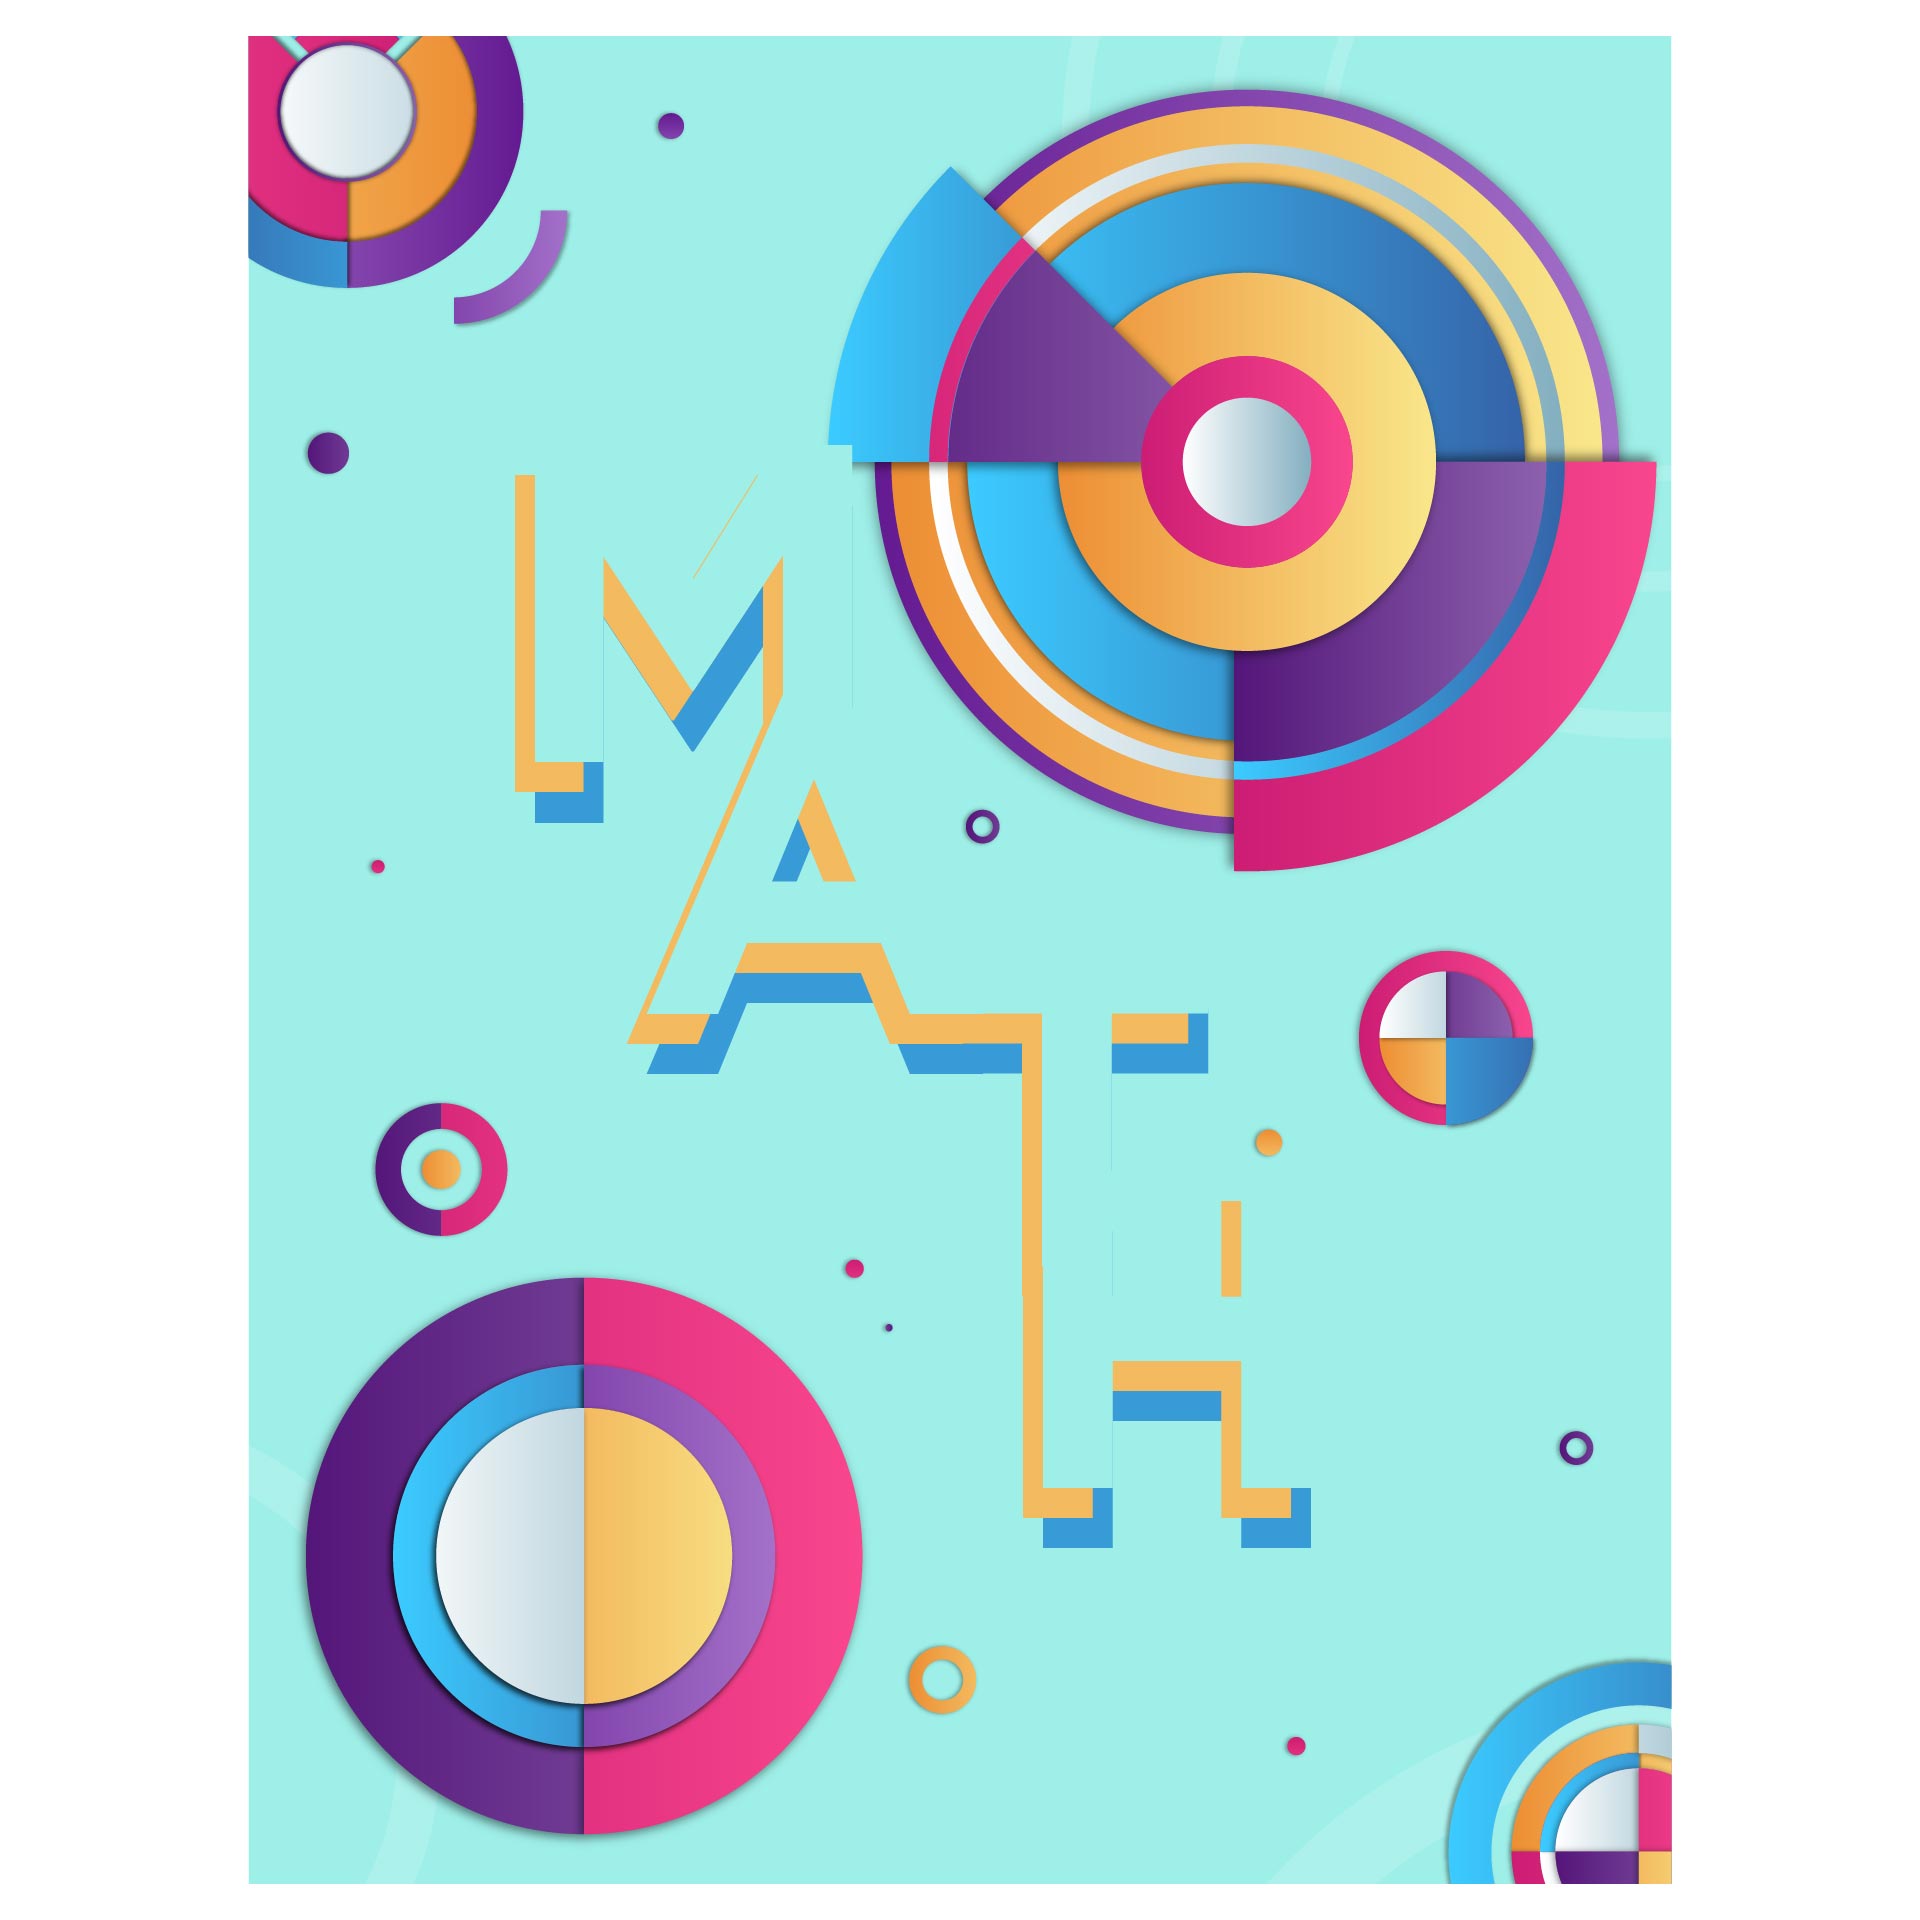 boy math binder cover